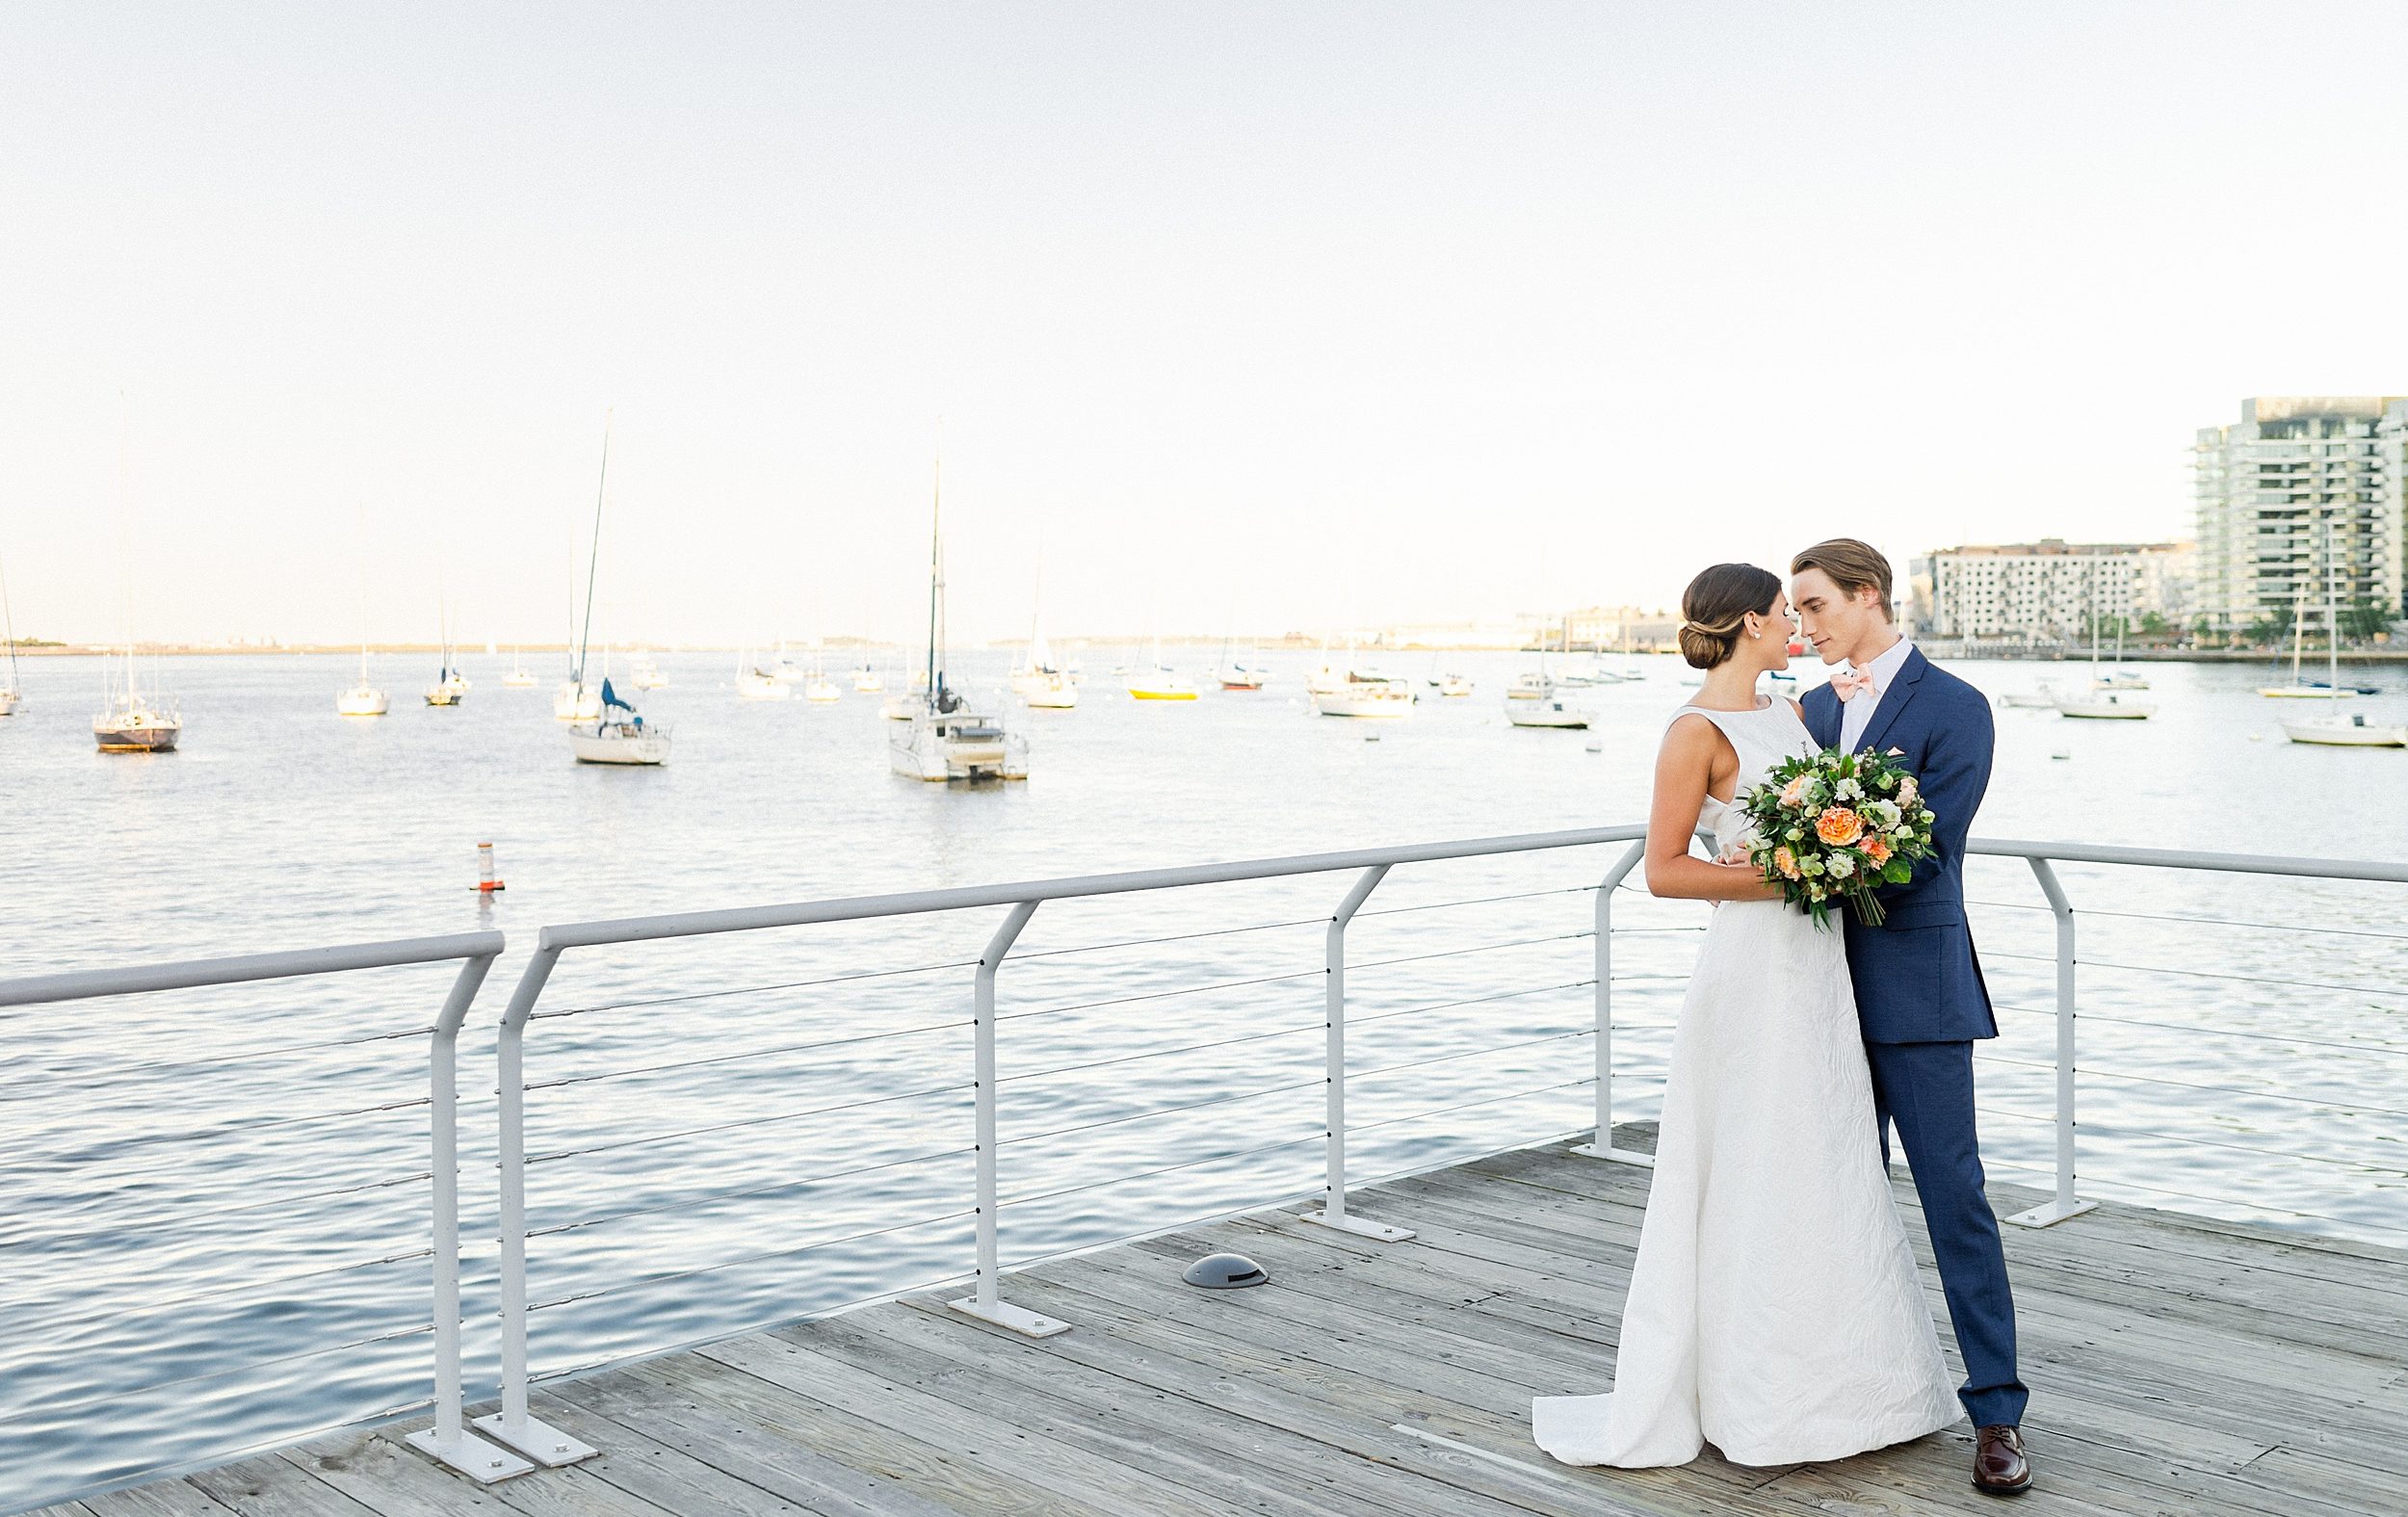 New England Aquarium Wedding Inspiration in Boston MA